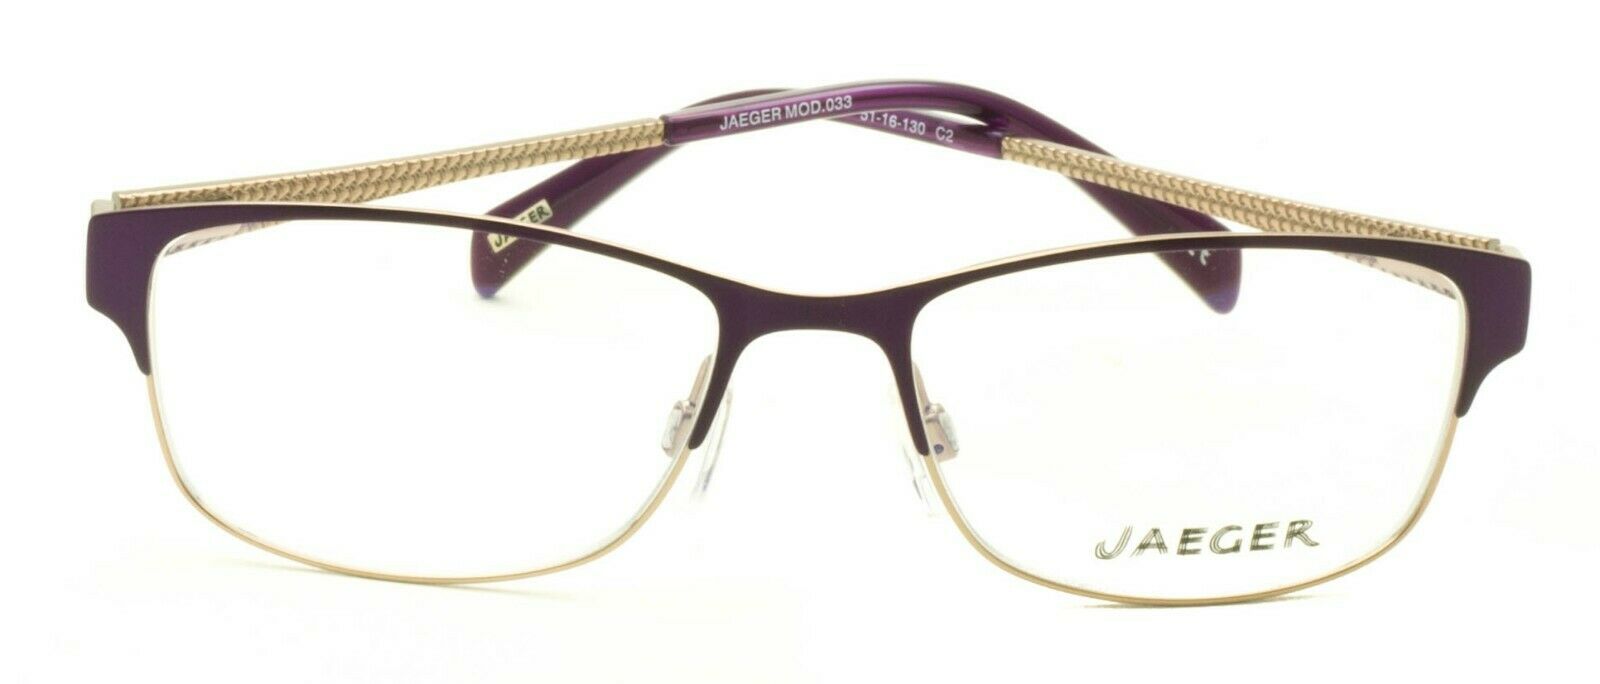 JAEGER Mod 033 C2 51mm Eyewear FRAMES RX Optical Glasses Eyeglasses New ...